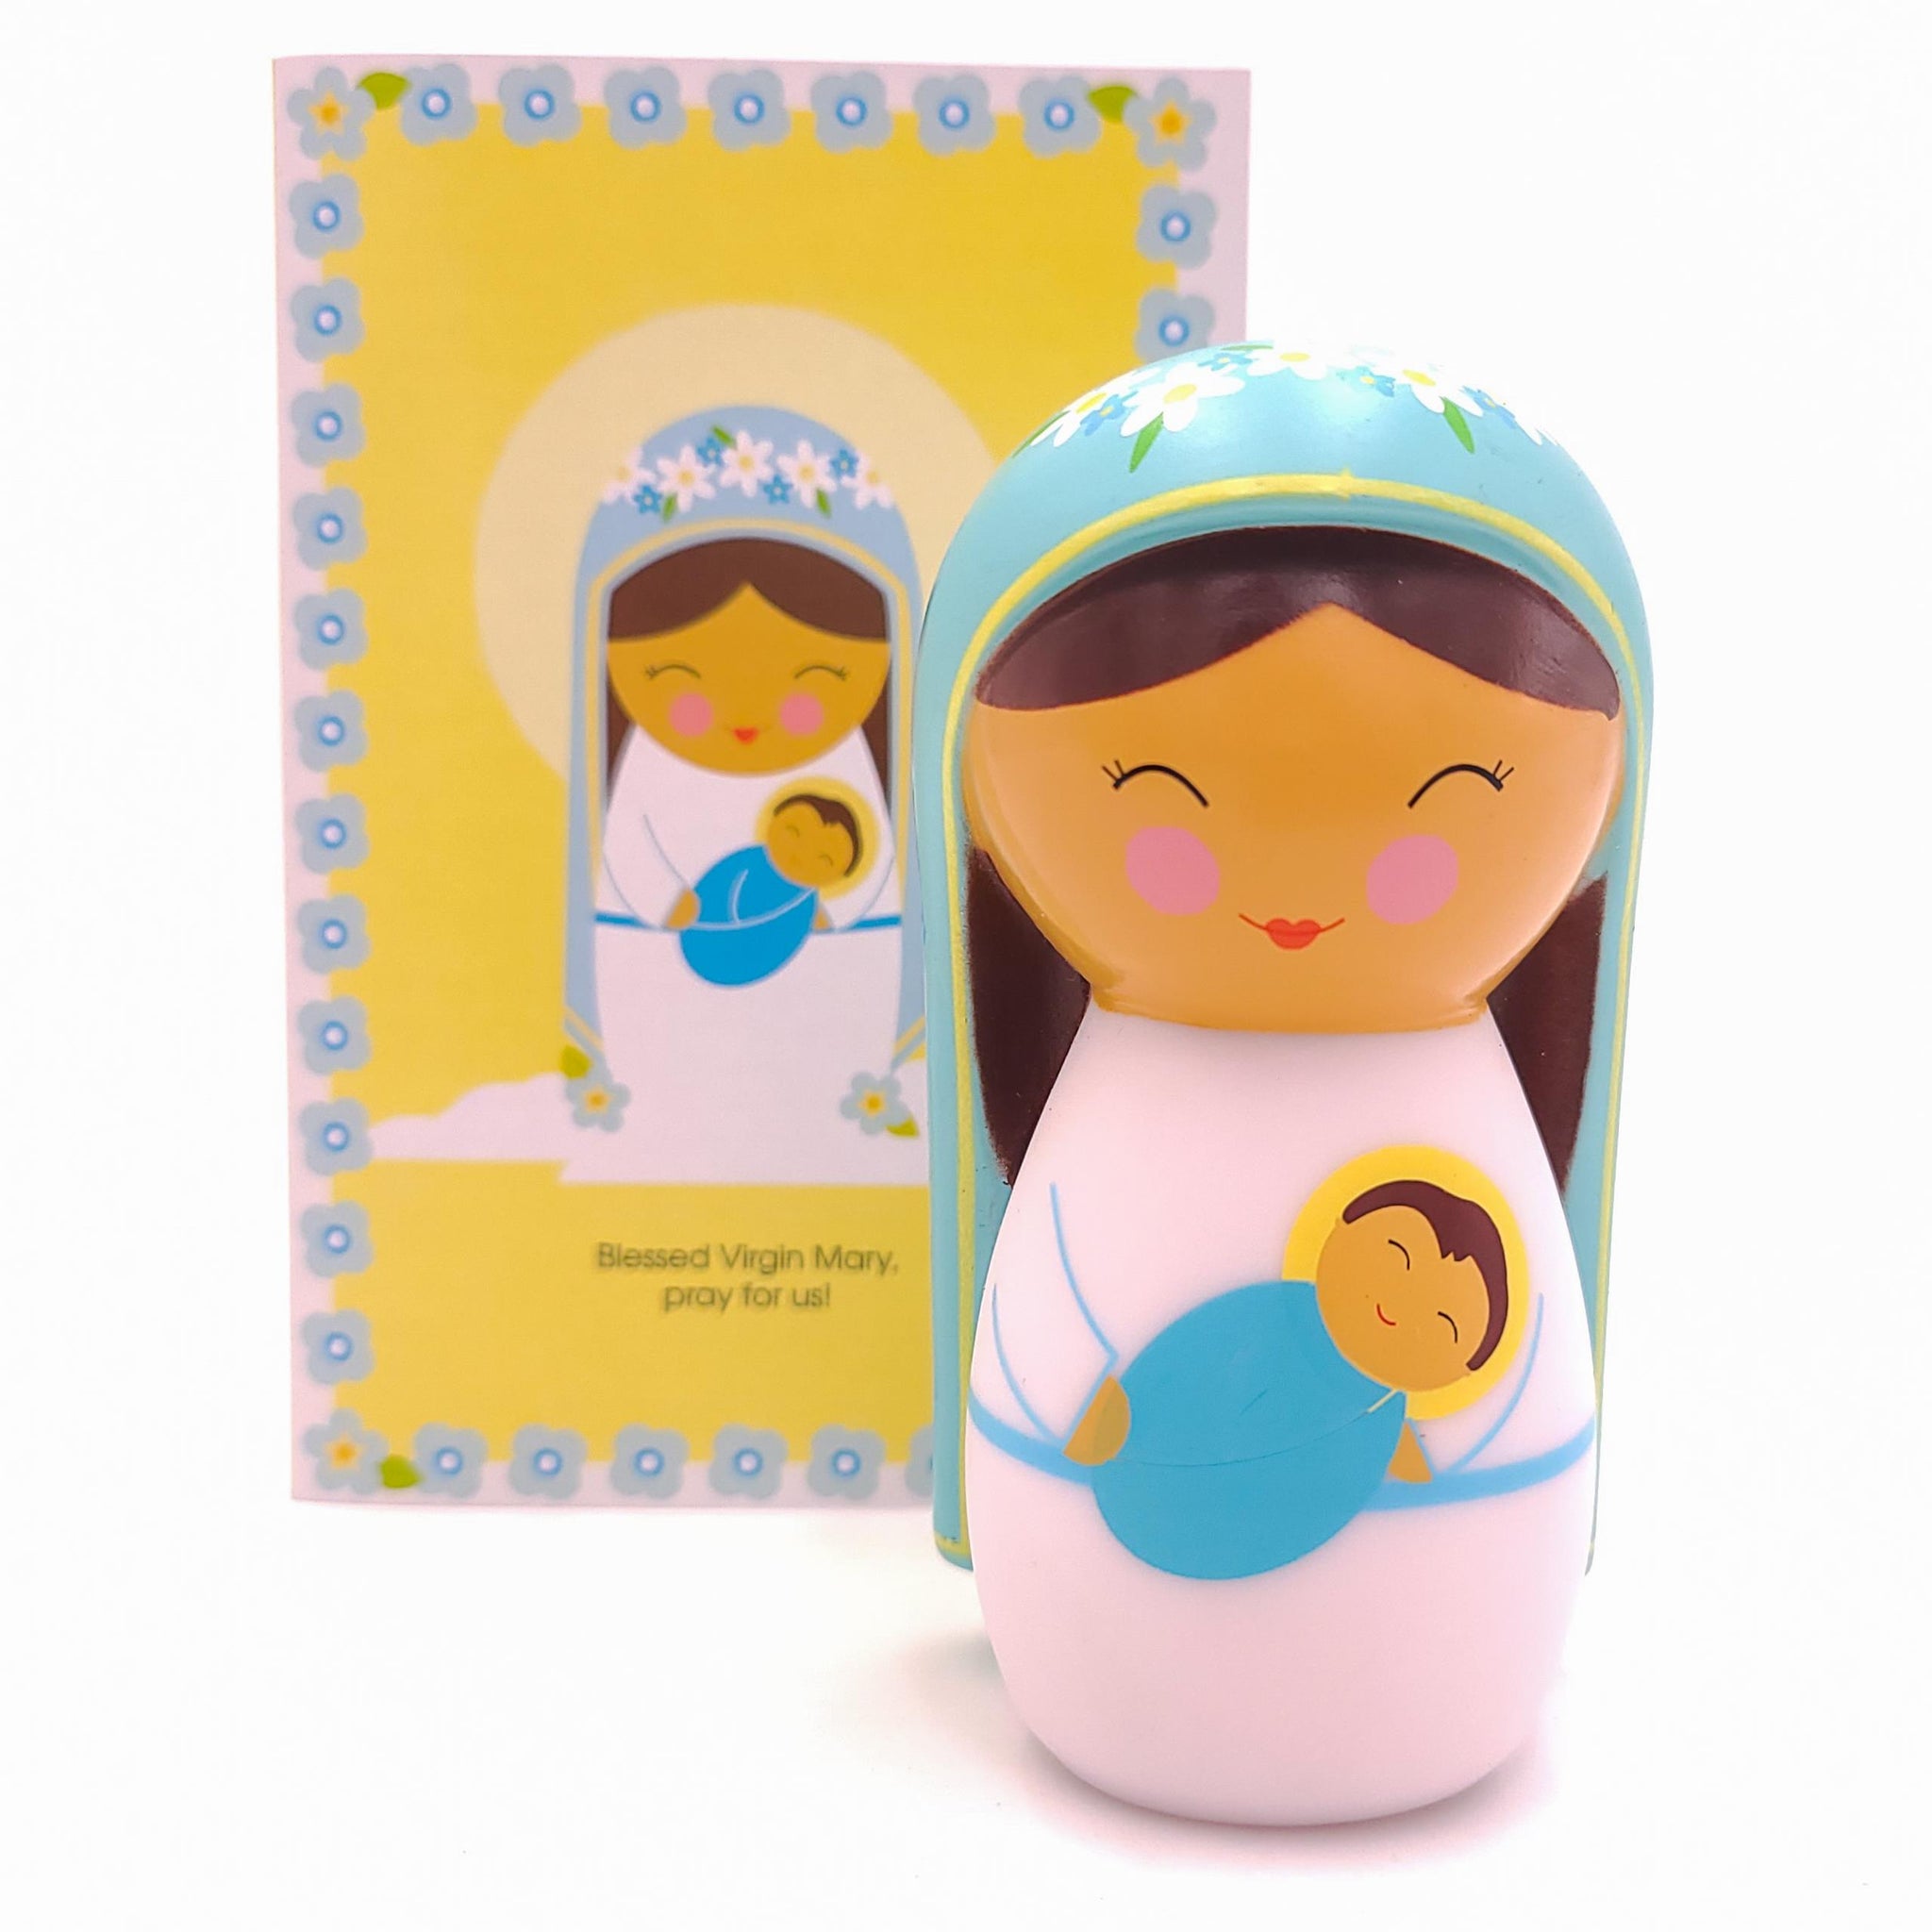 Virgin Mary and Baby Jesus - Devotional Vinyl Figure